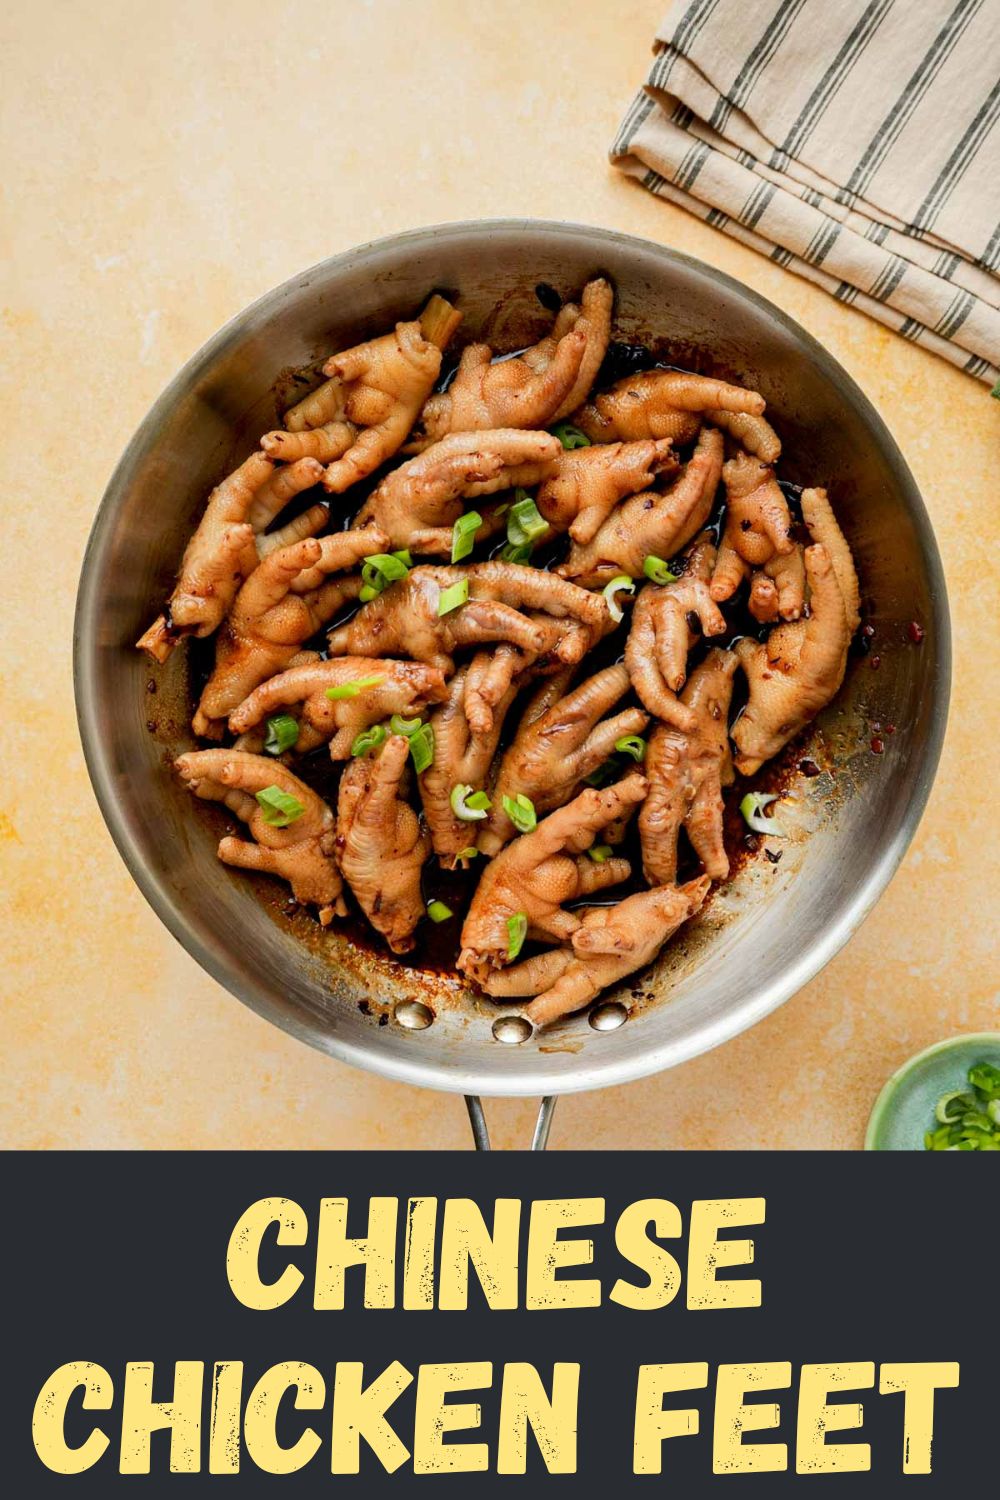 The Best Chinese Chicken Feet Recipe for Dim Sum